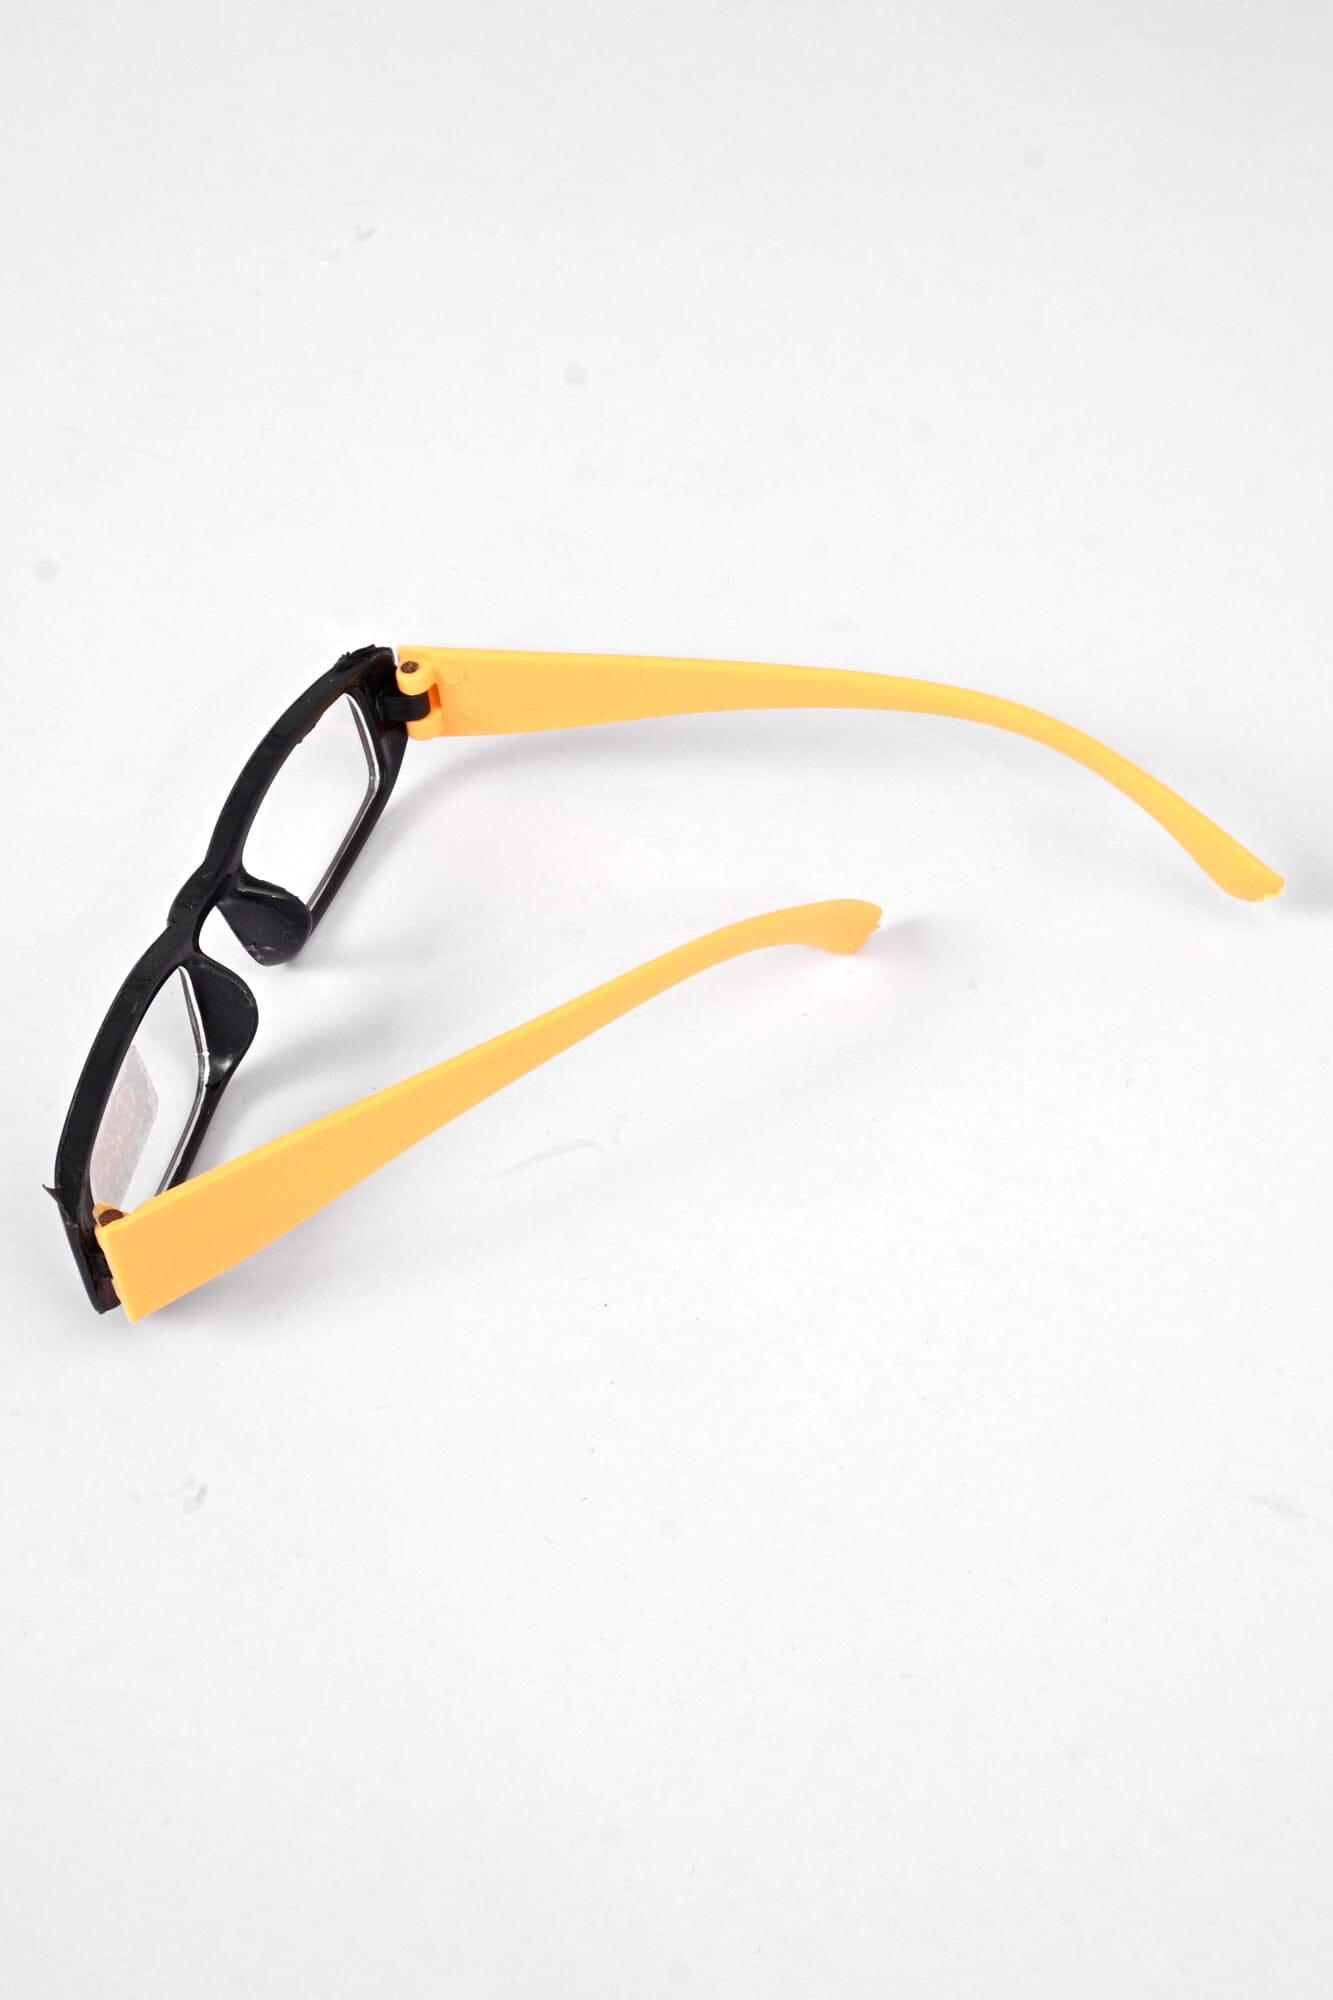 Athens Kid's Rectangle Design Glasses Kid's Accessories SRL 